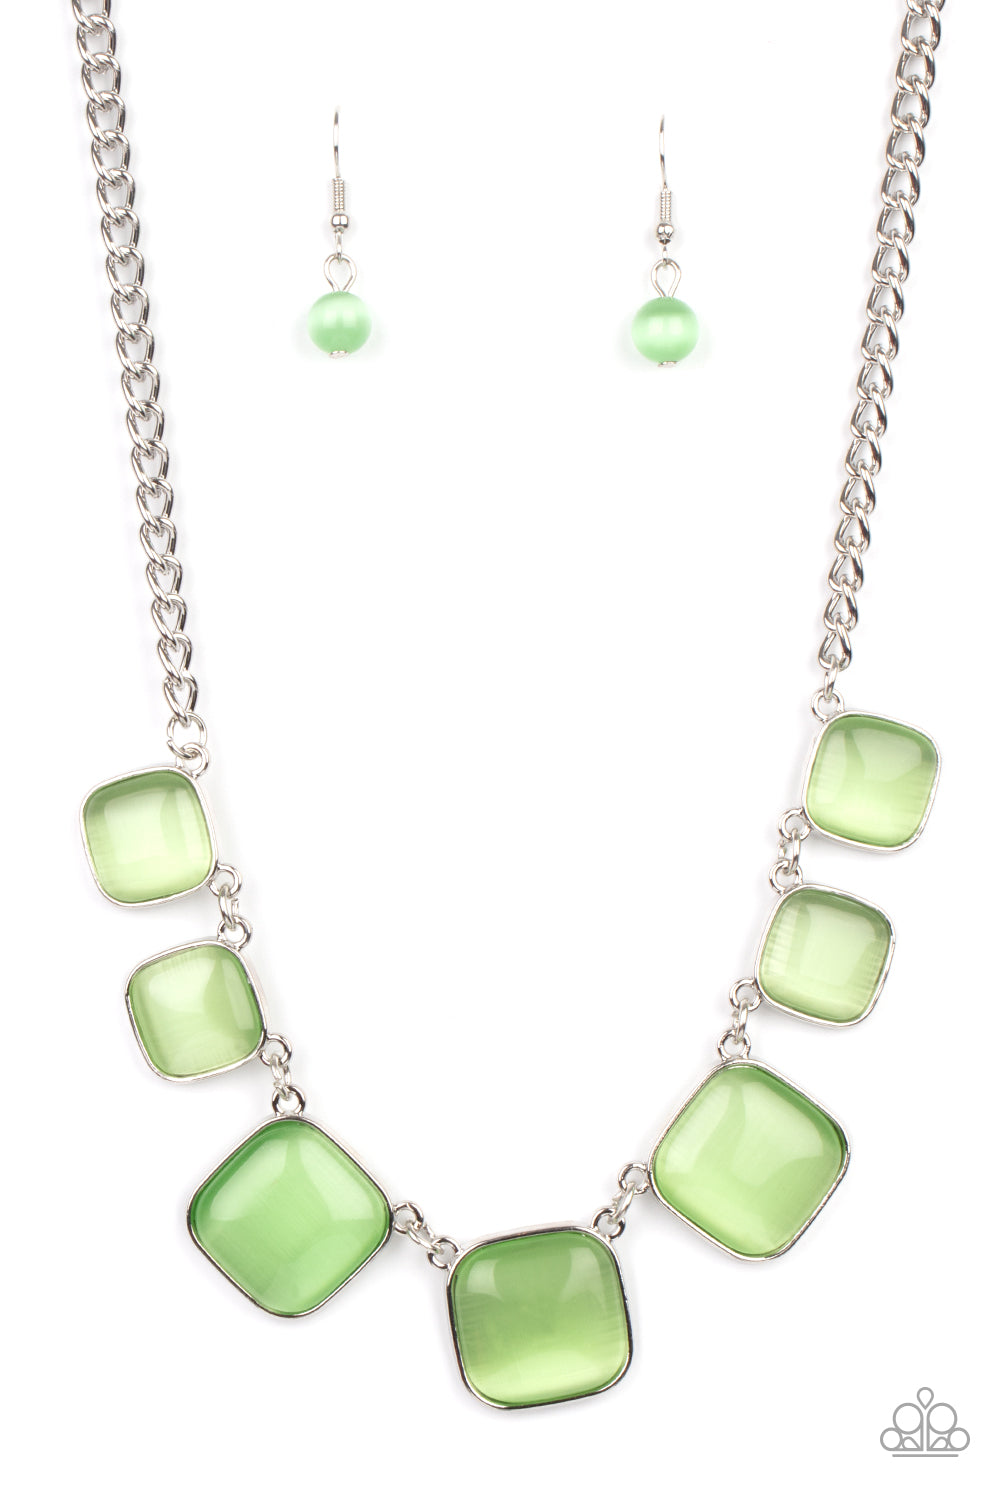 Aura Allure - Green Necklace freeshipping - JewLz4u Gemstone Gallery